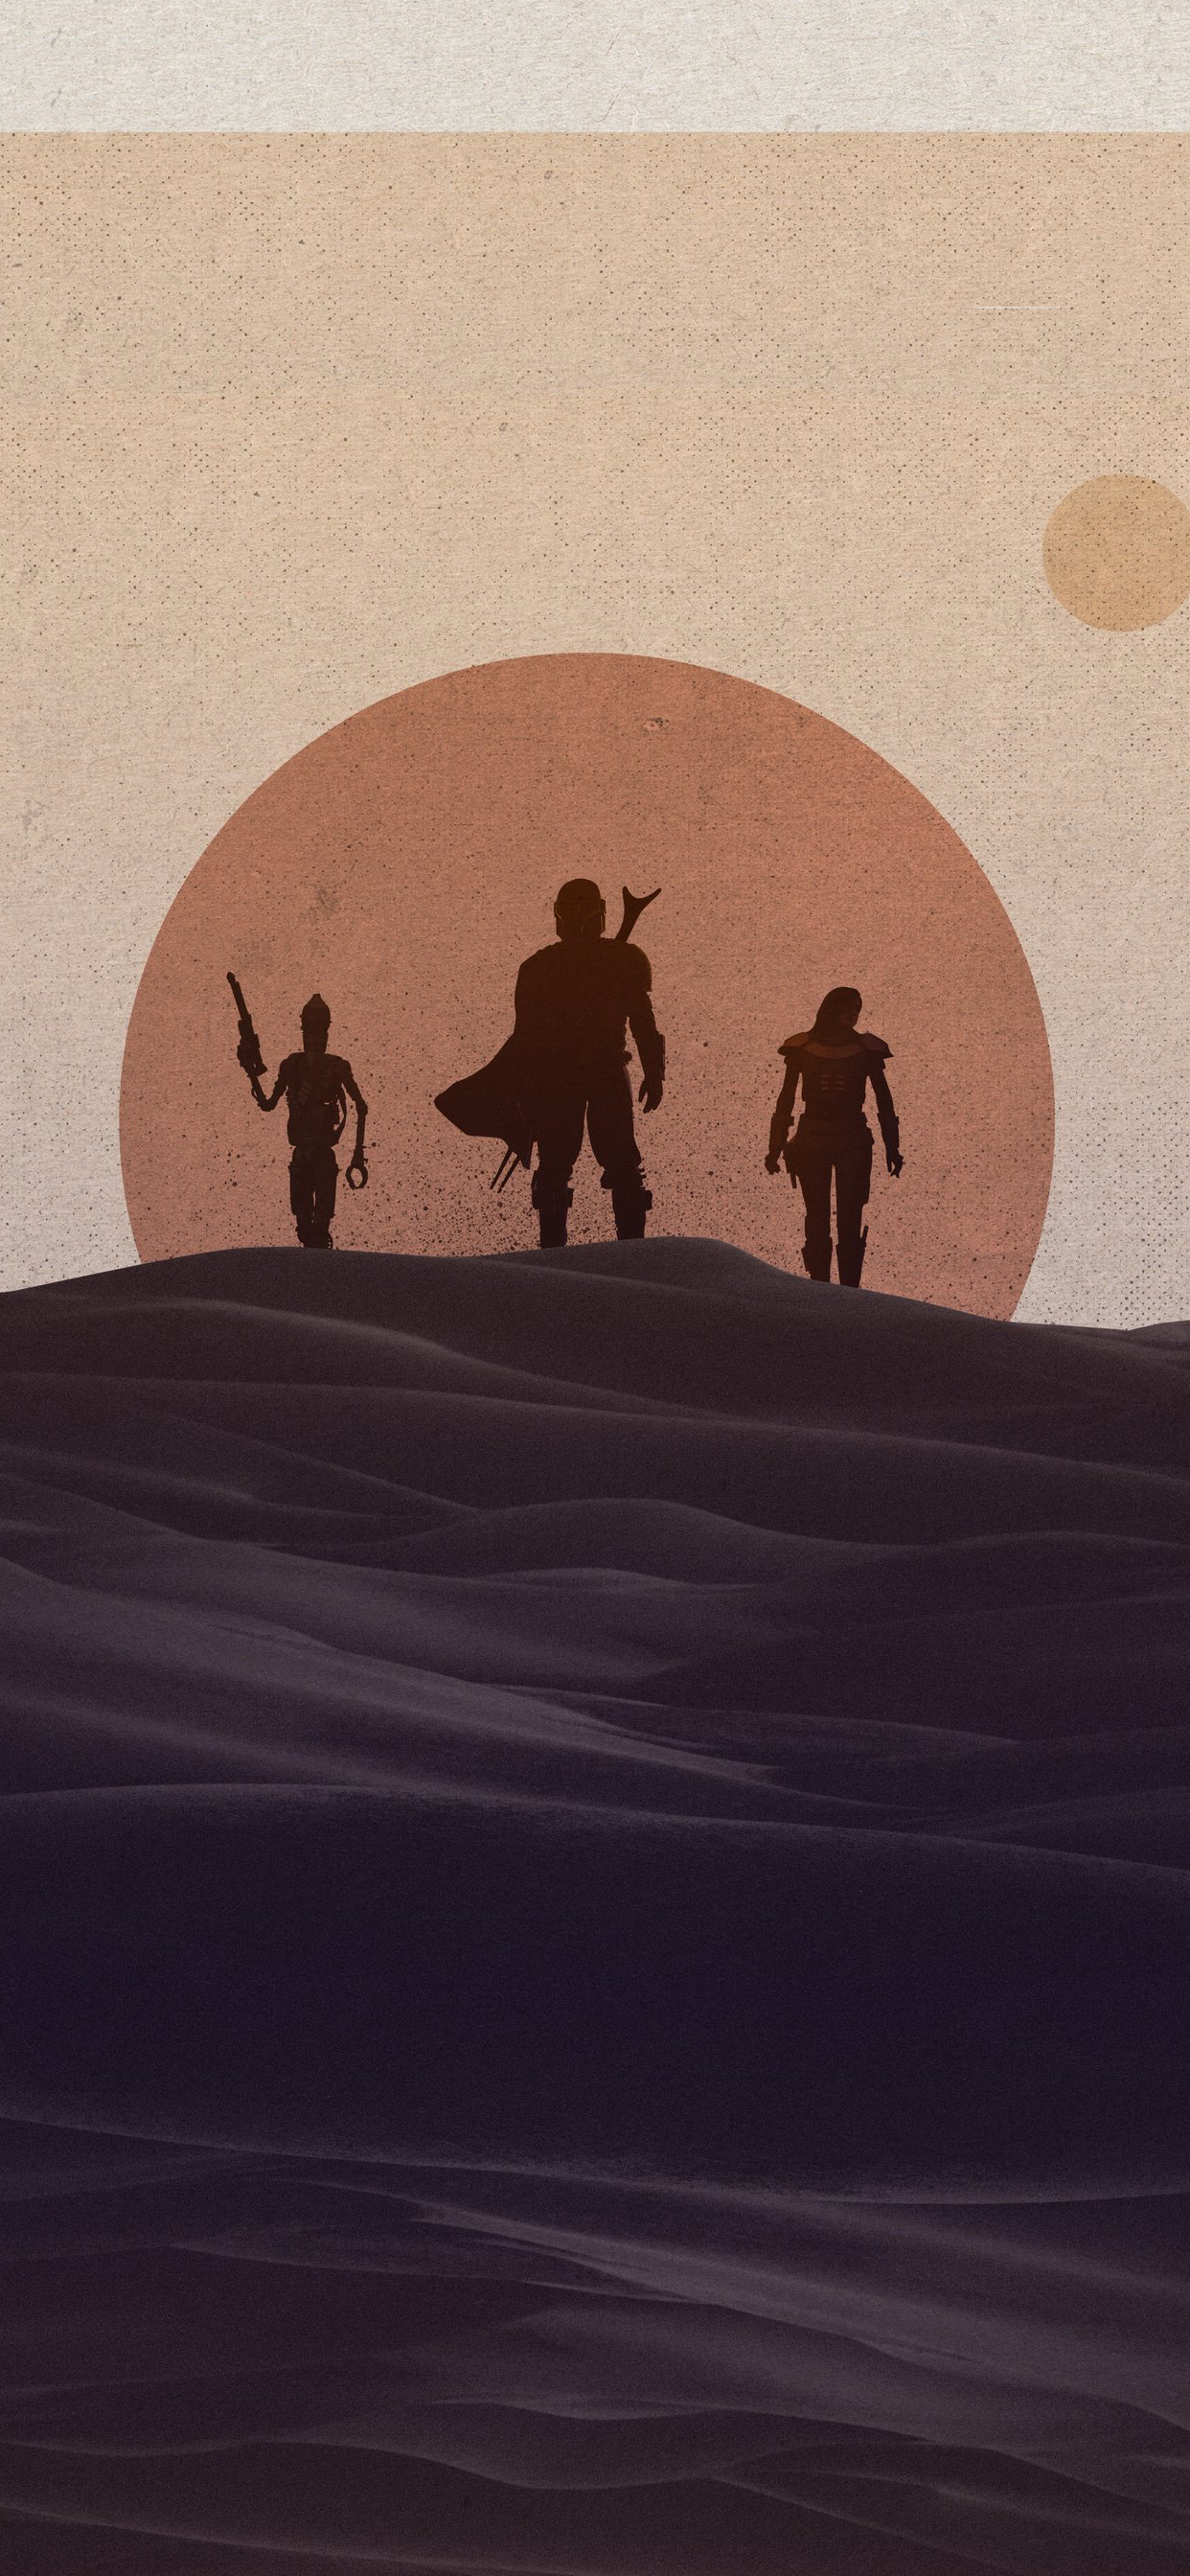 Disney-Star-Wars-Mandalorian-iPhone-Wallpaper-sunset-needledesign